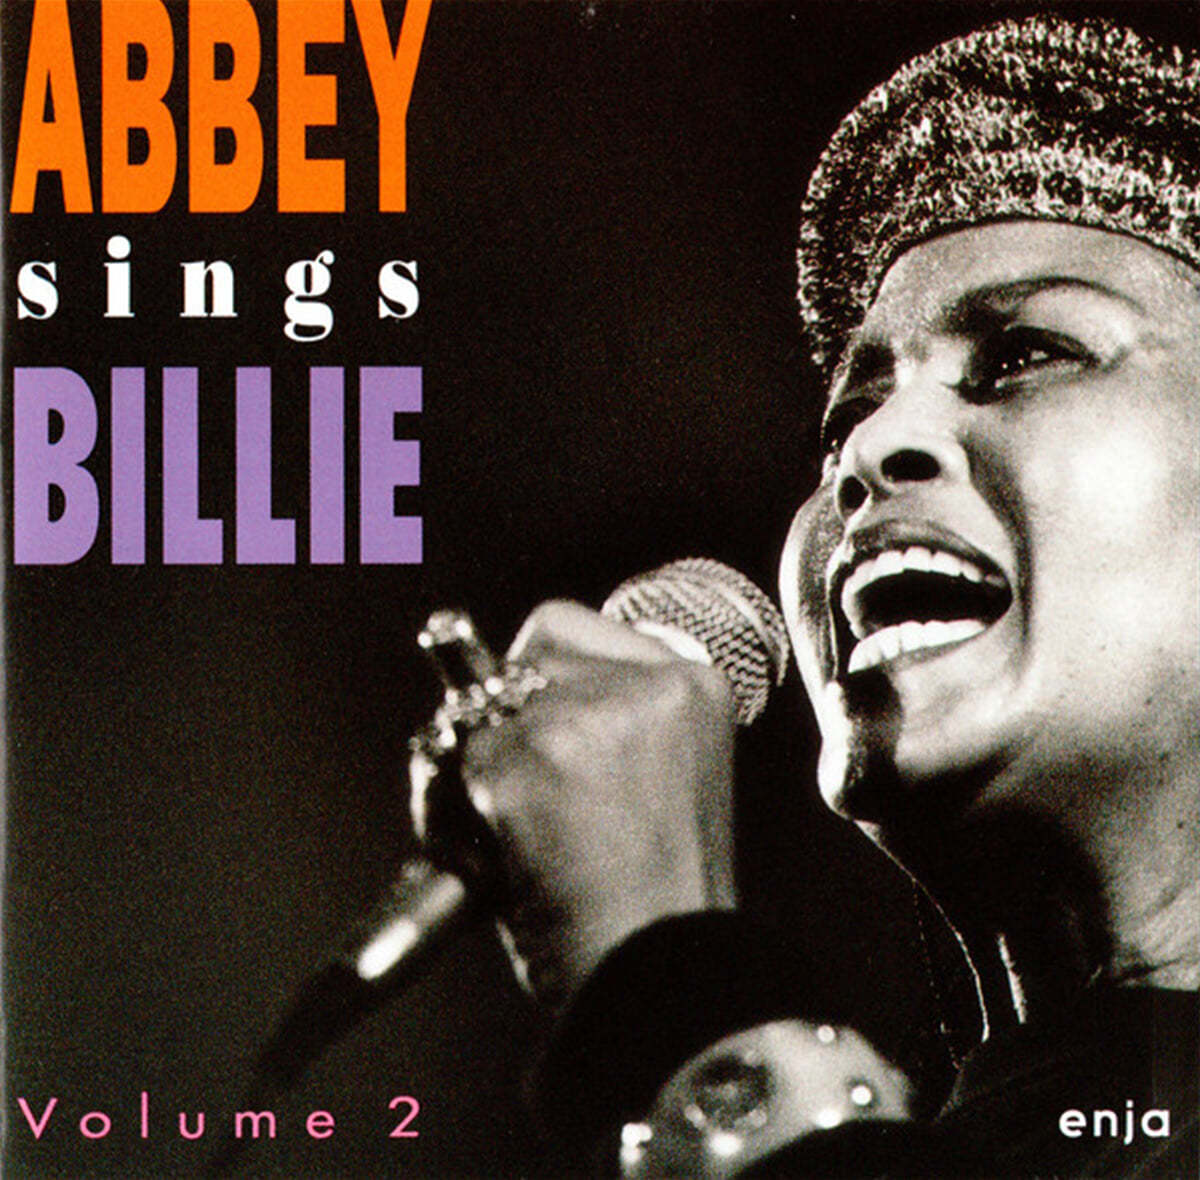 Abbey Lincoln (아비 린코인) - Abbey Sings Billie Volume 2